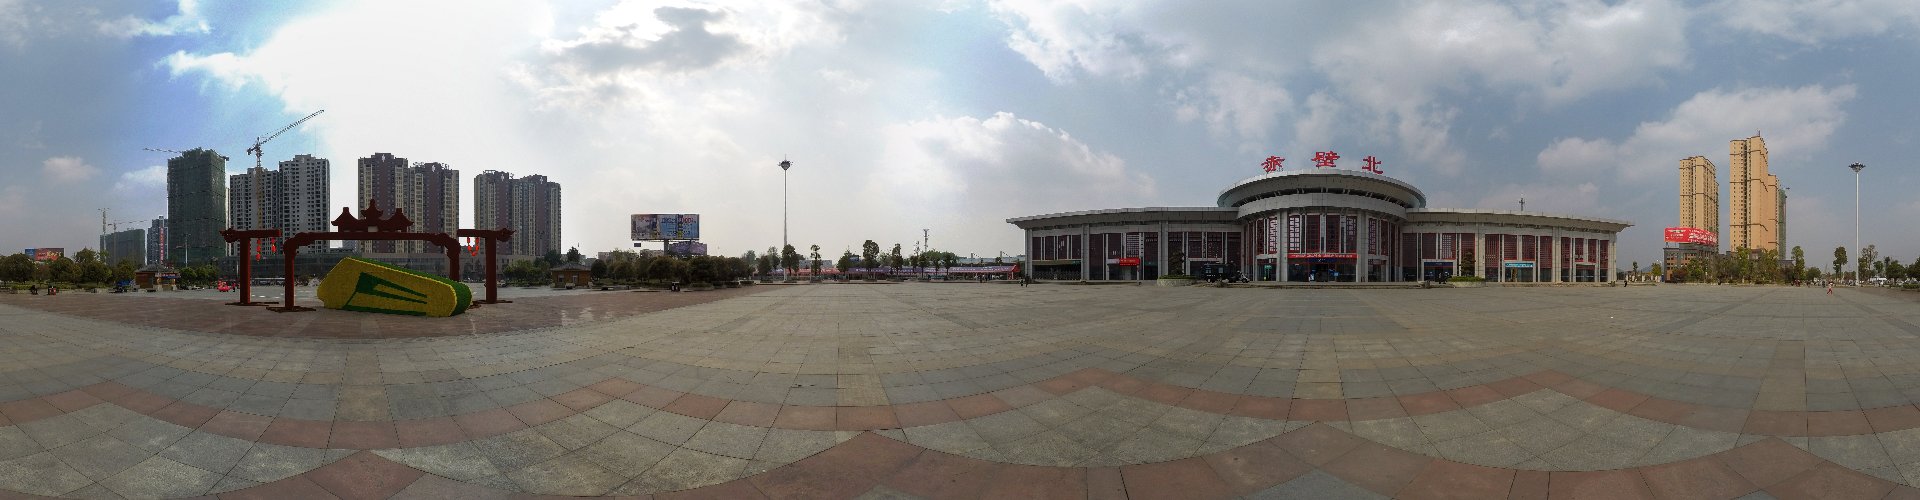 Panorama_Chibi-Station1